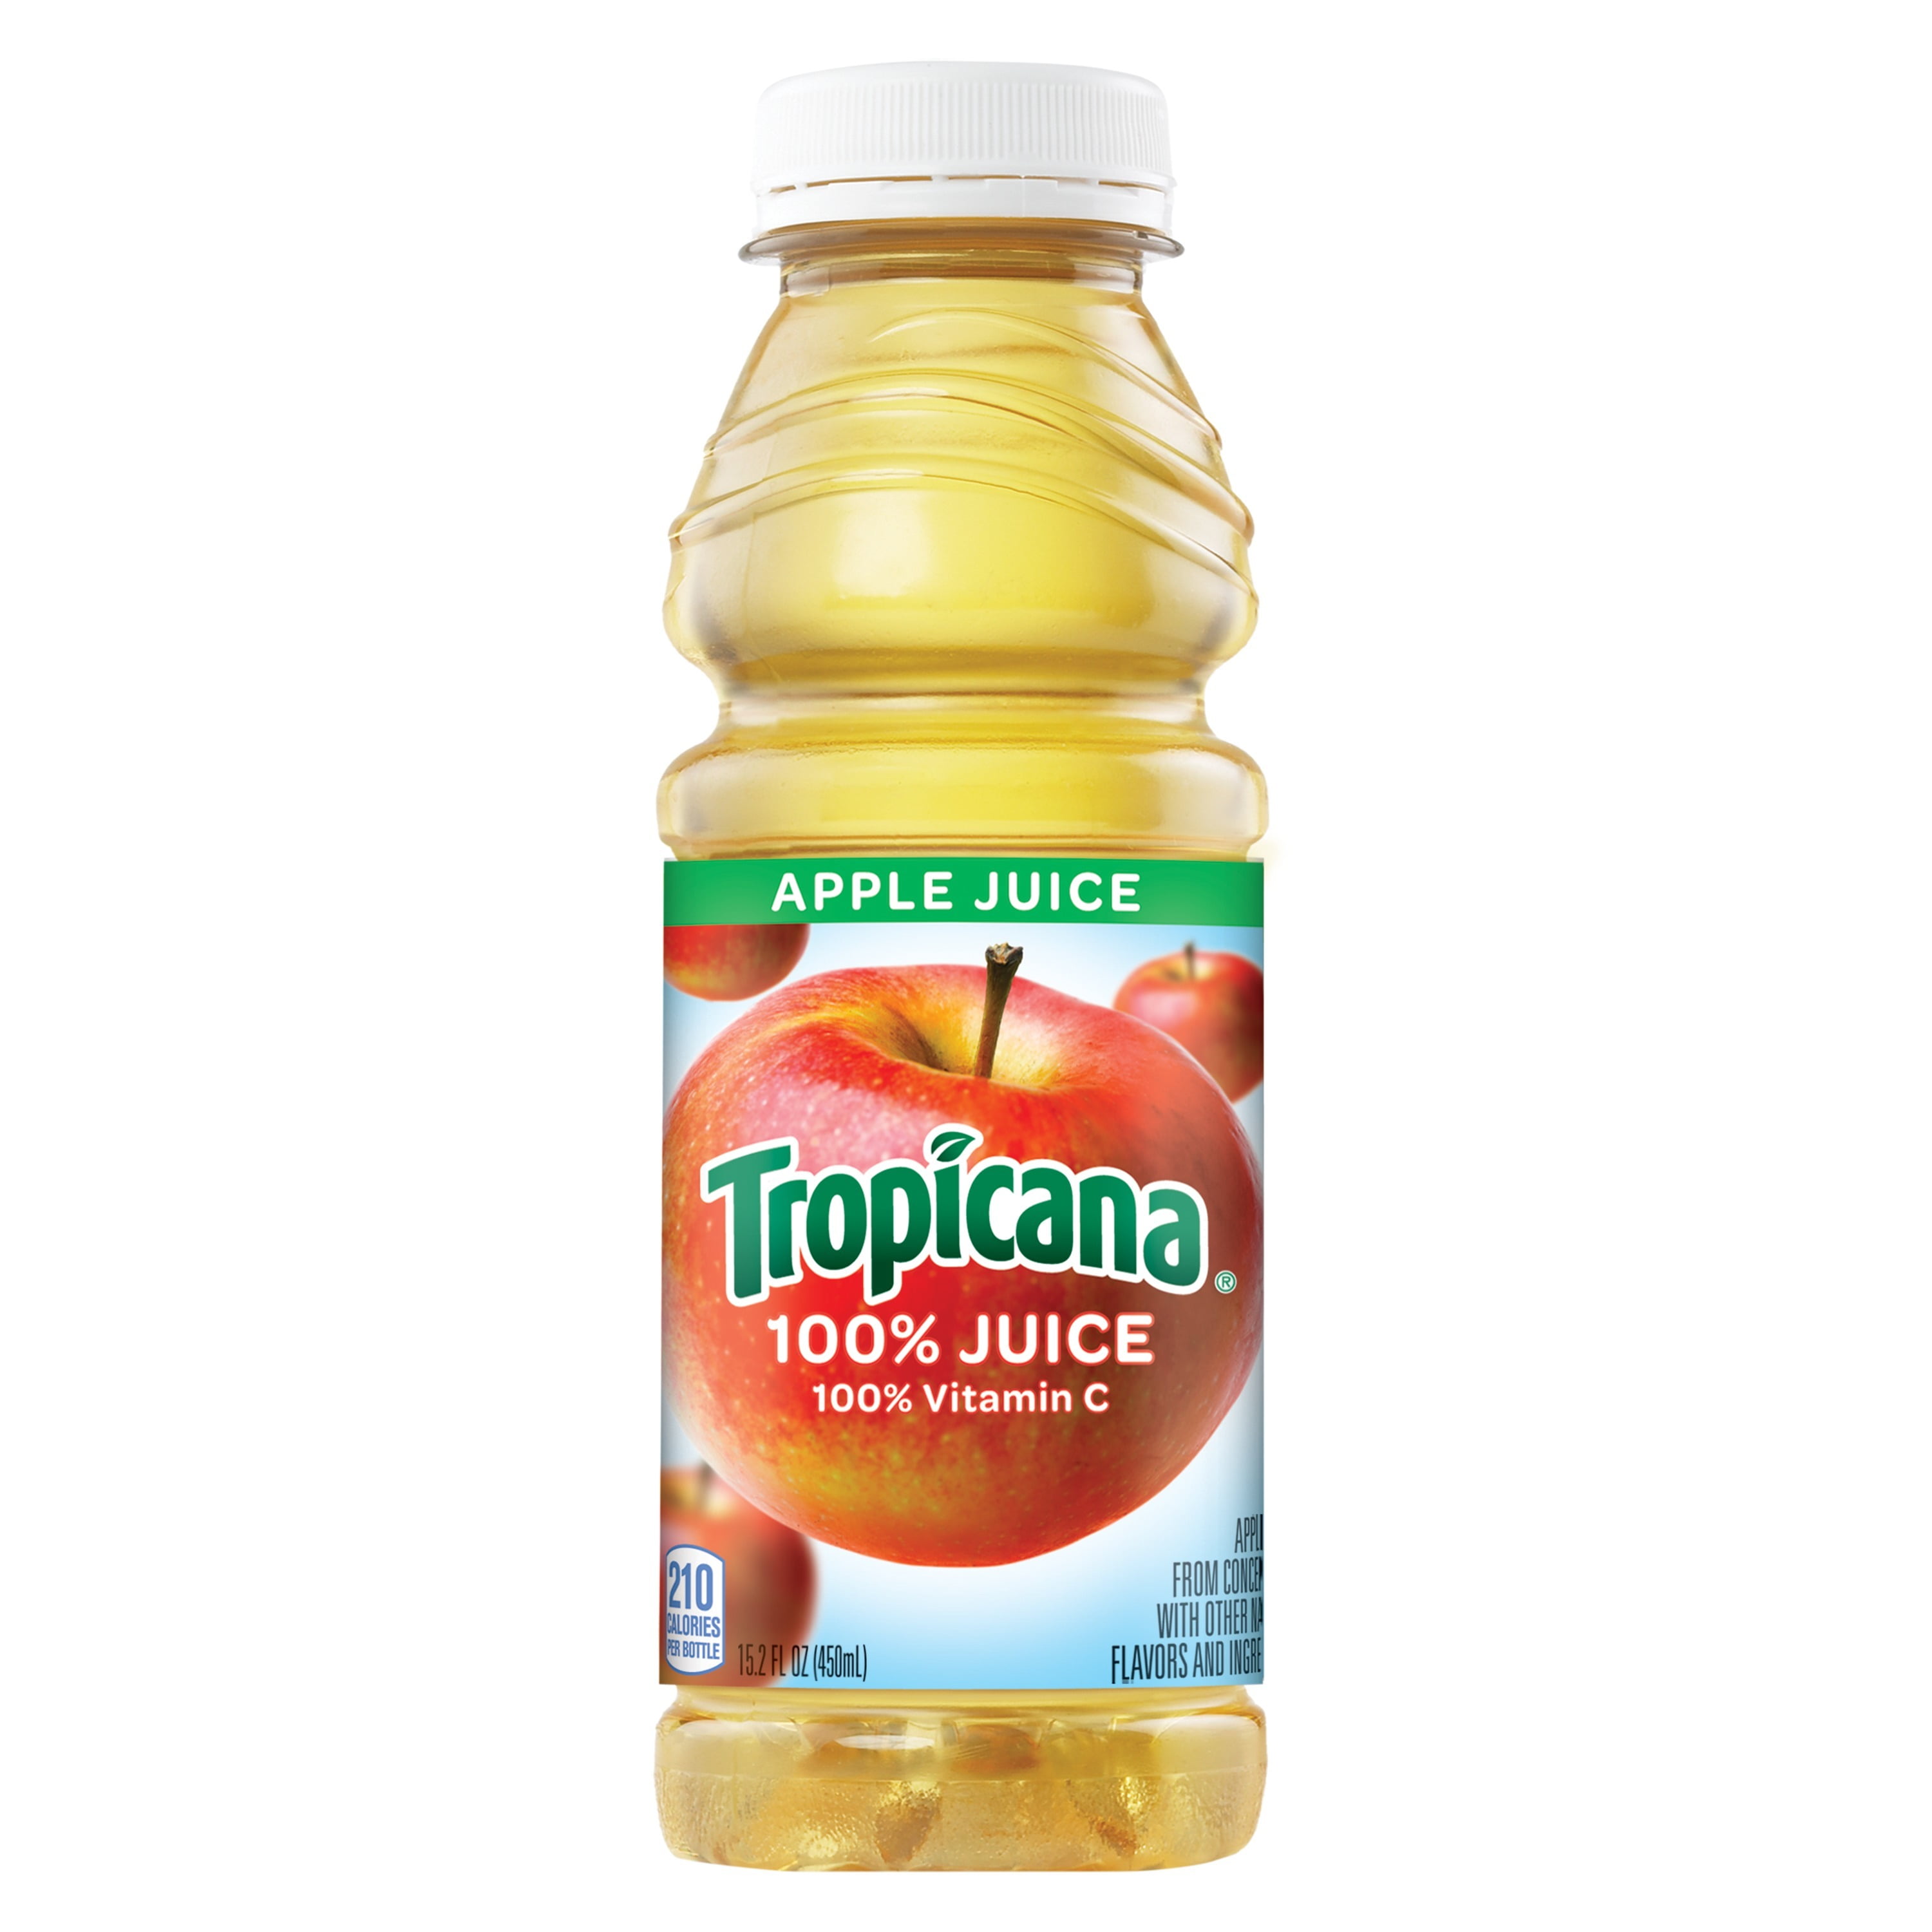 where to get tropicana apple juice